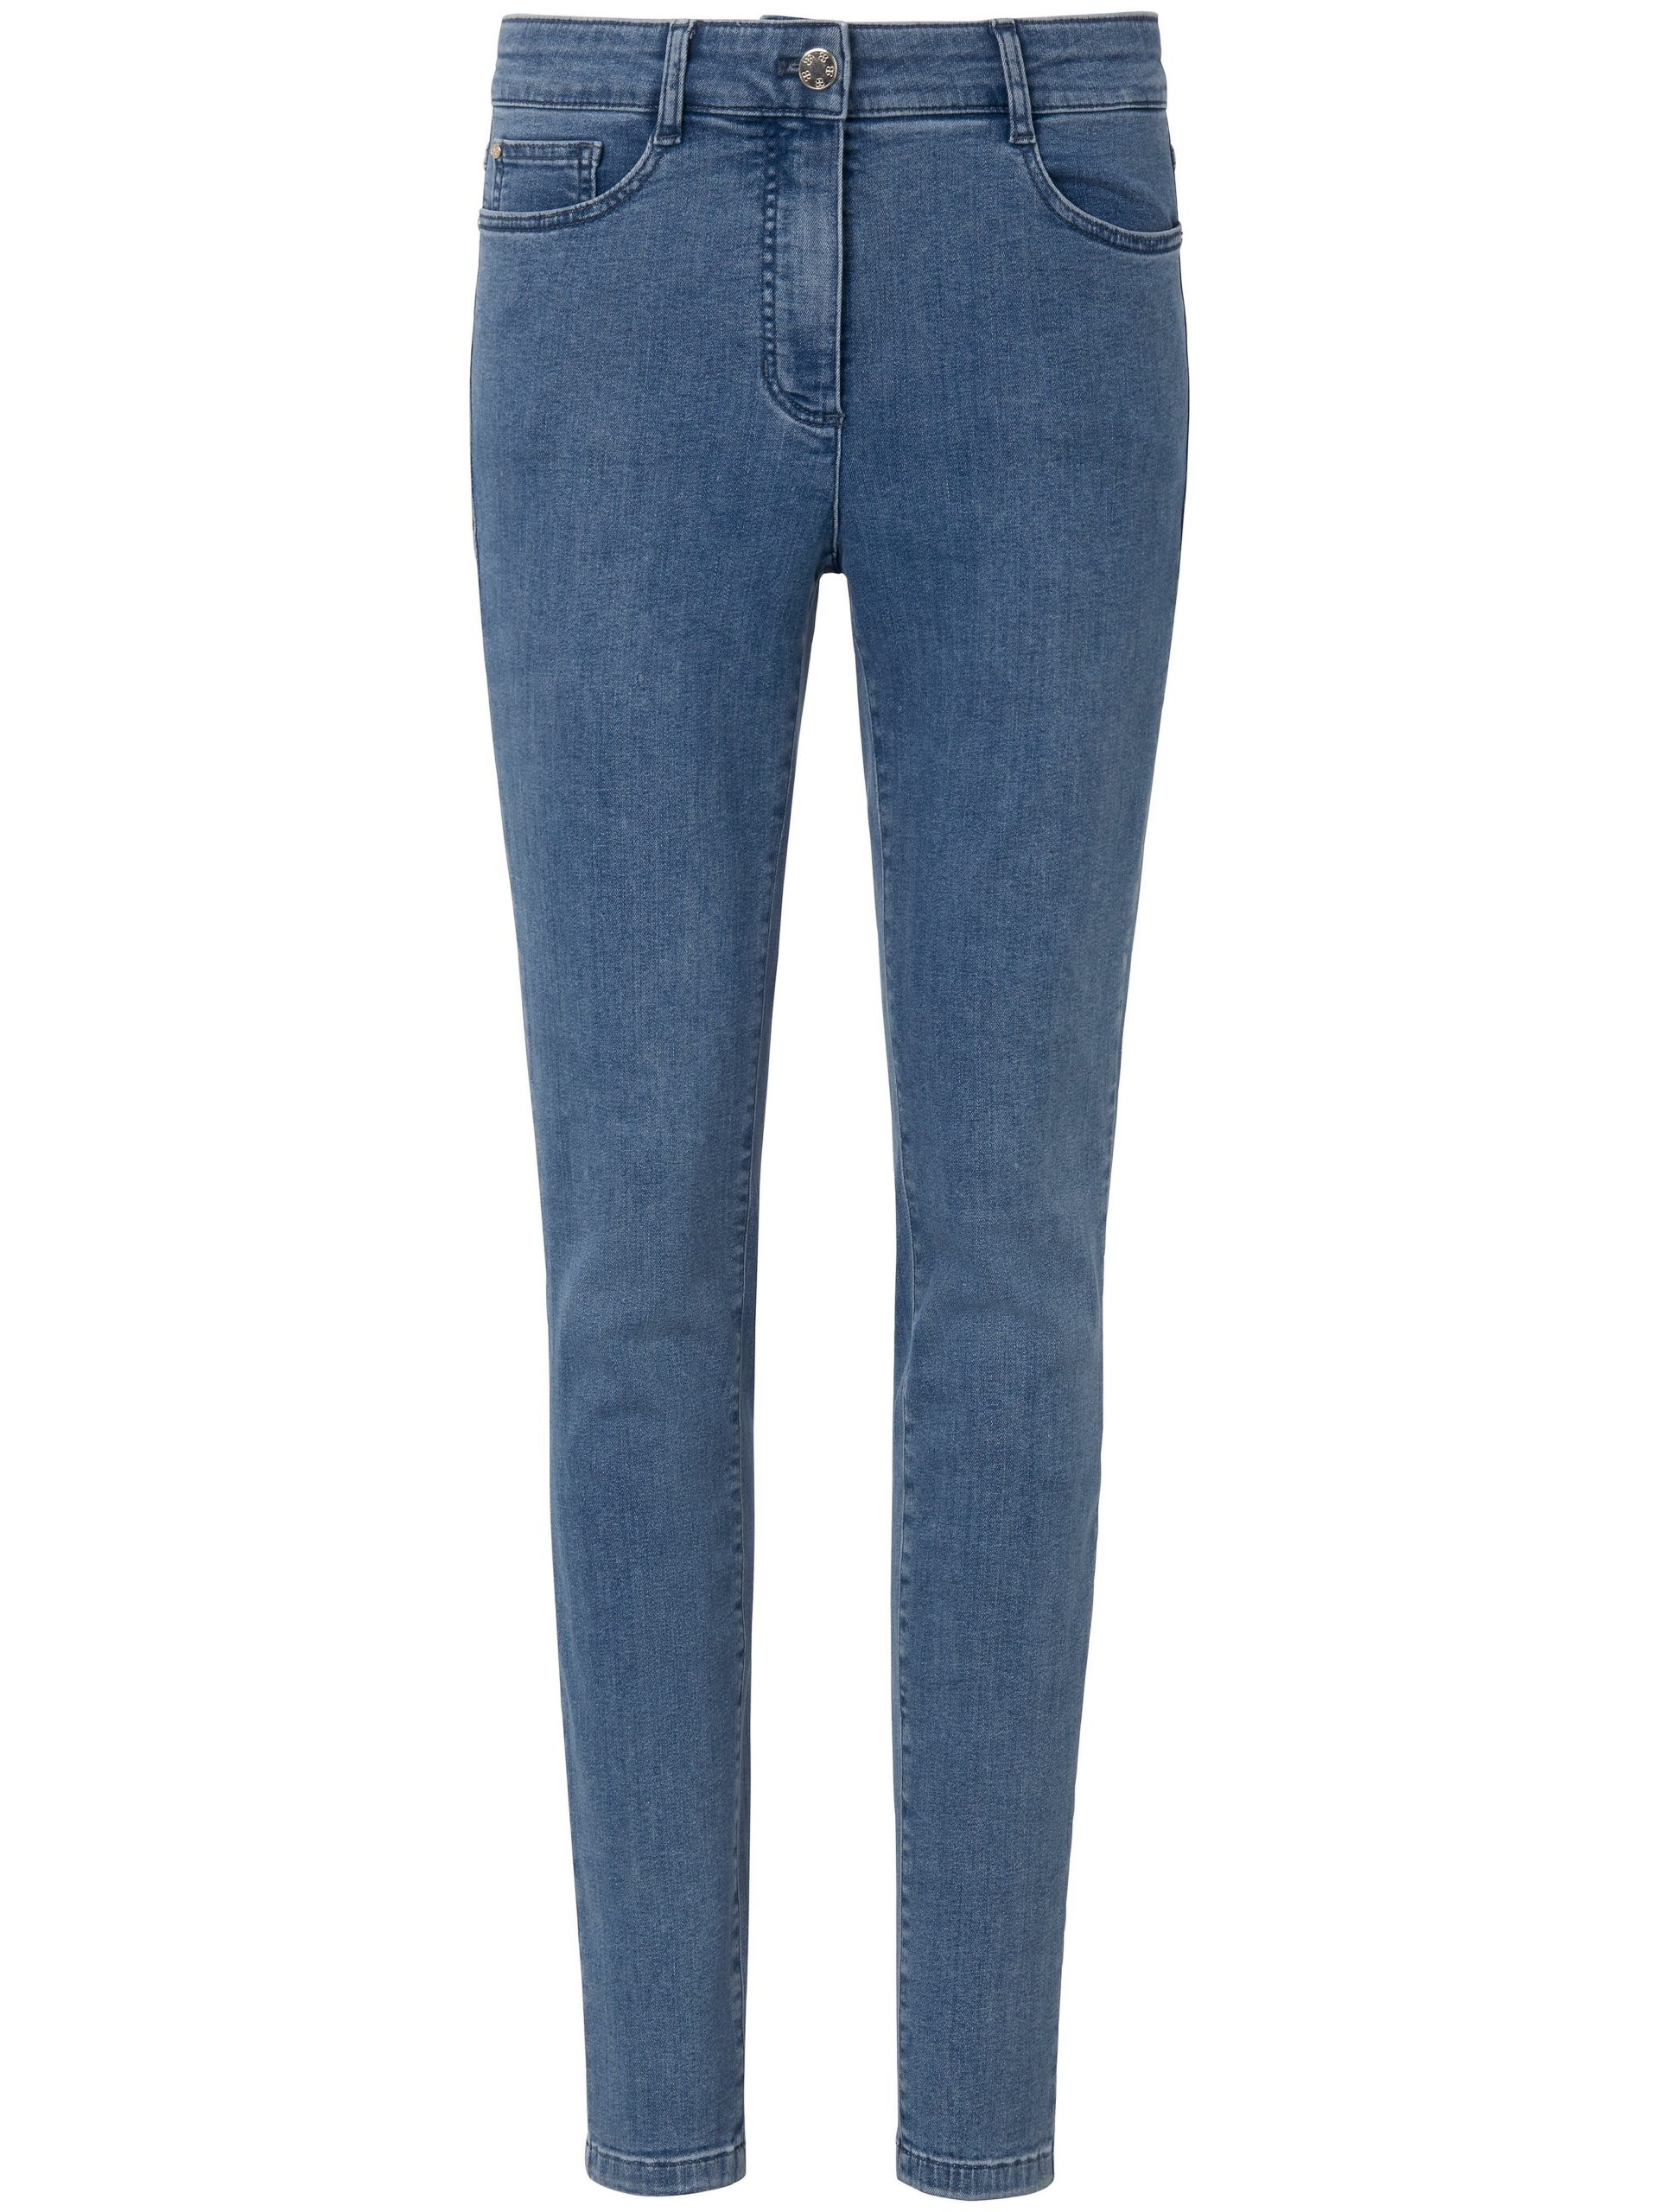 Jeans model Julienne Van Basler denim Kopen